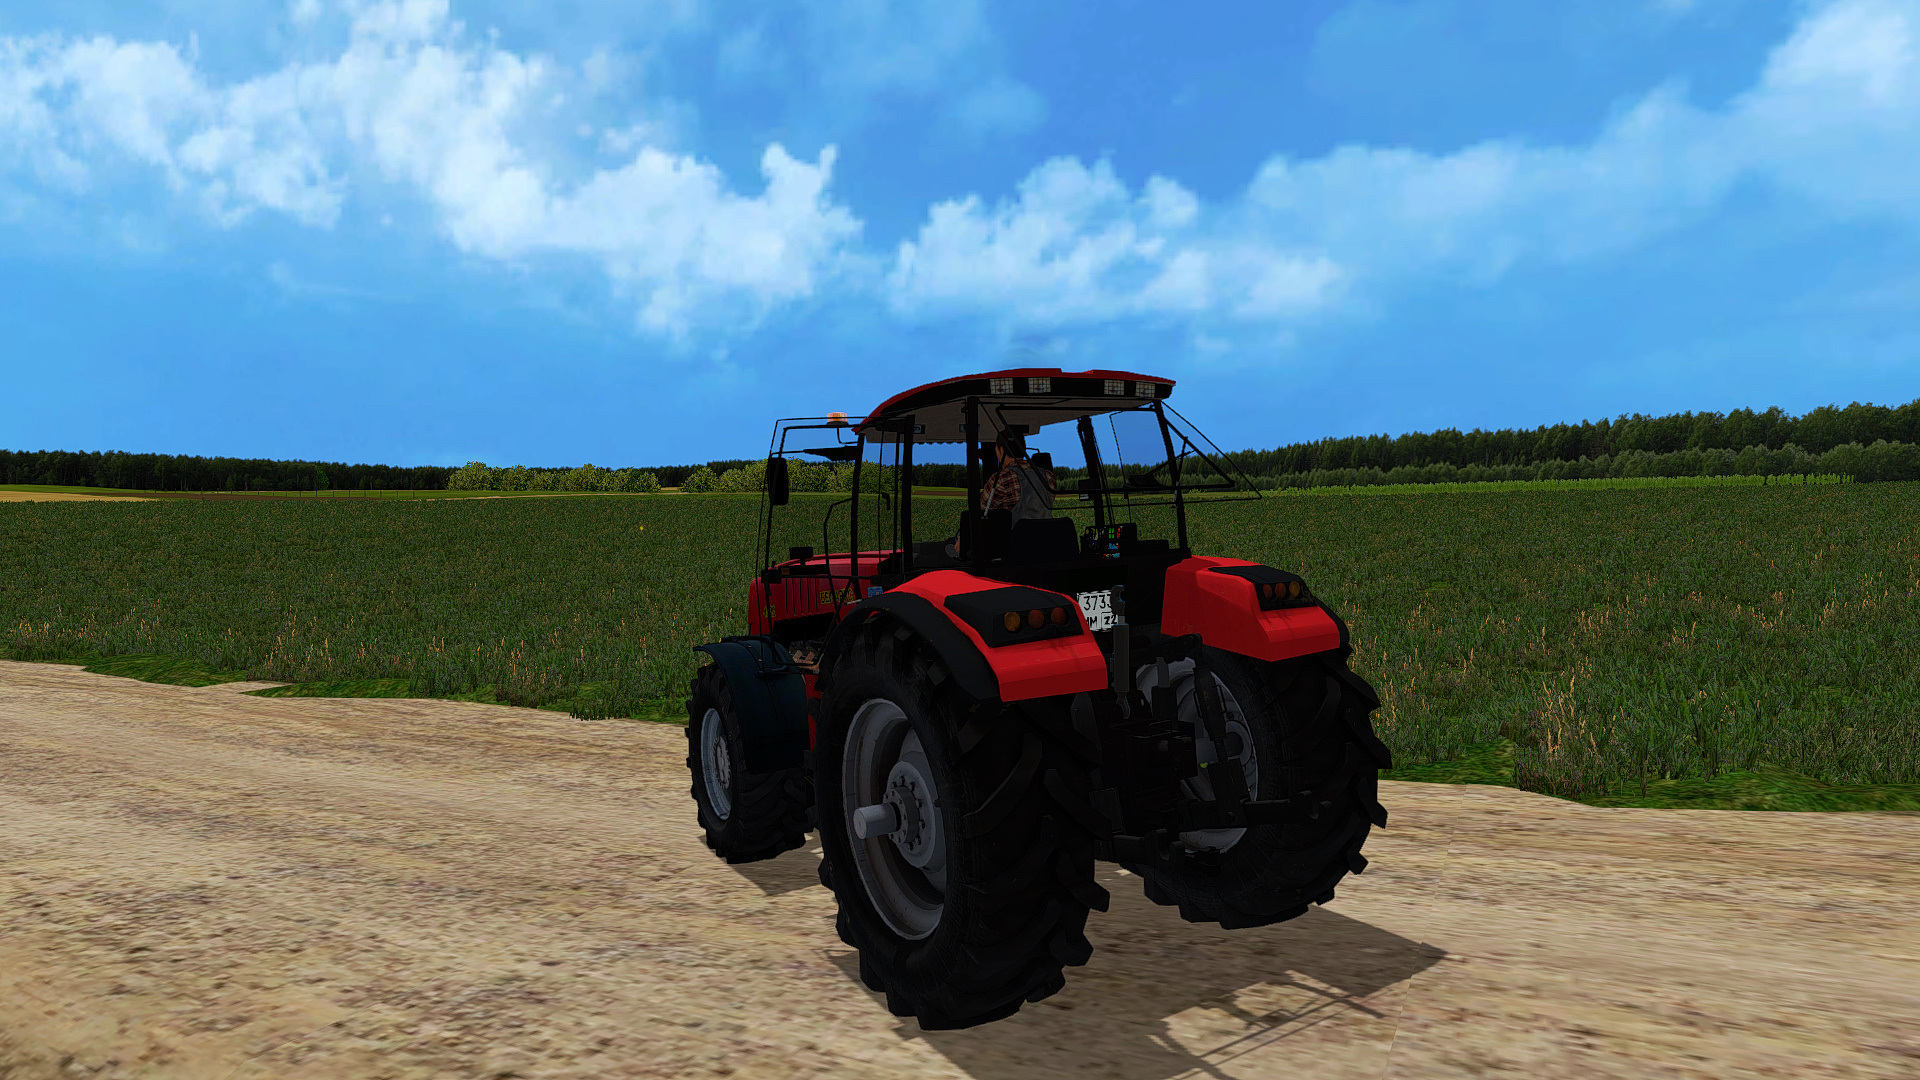 Tractor Belarus 4522 v1.4 for FS 15 » Zagruzka-Mods.com - Download ...